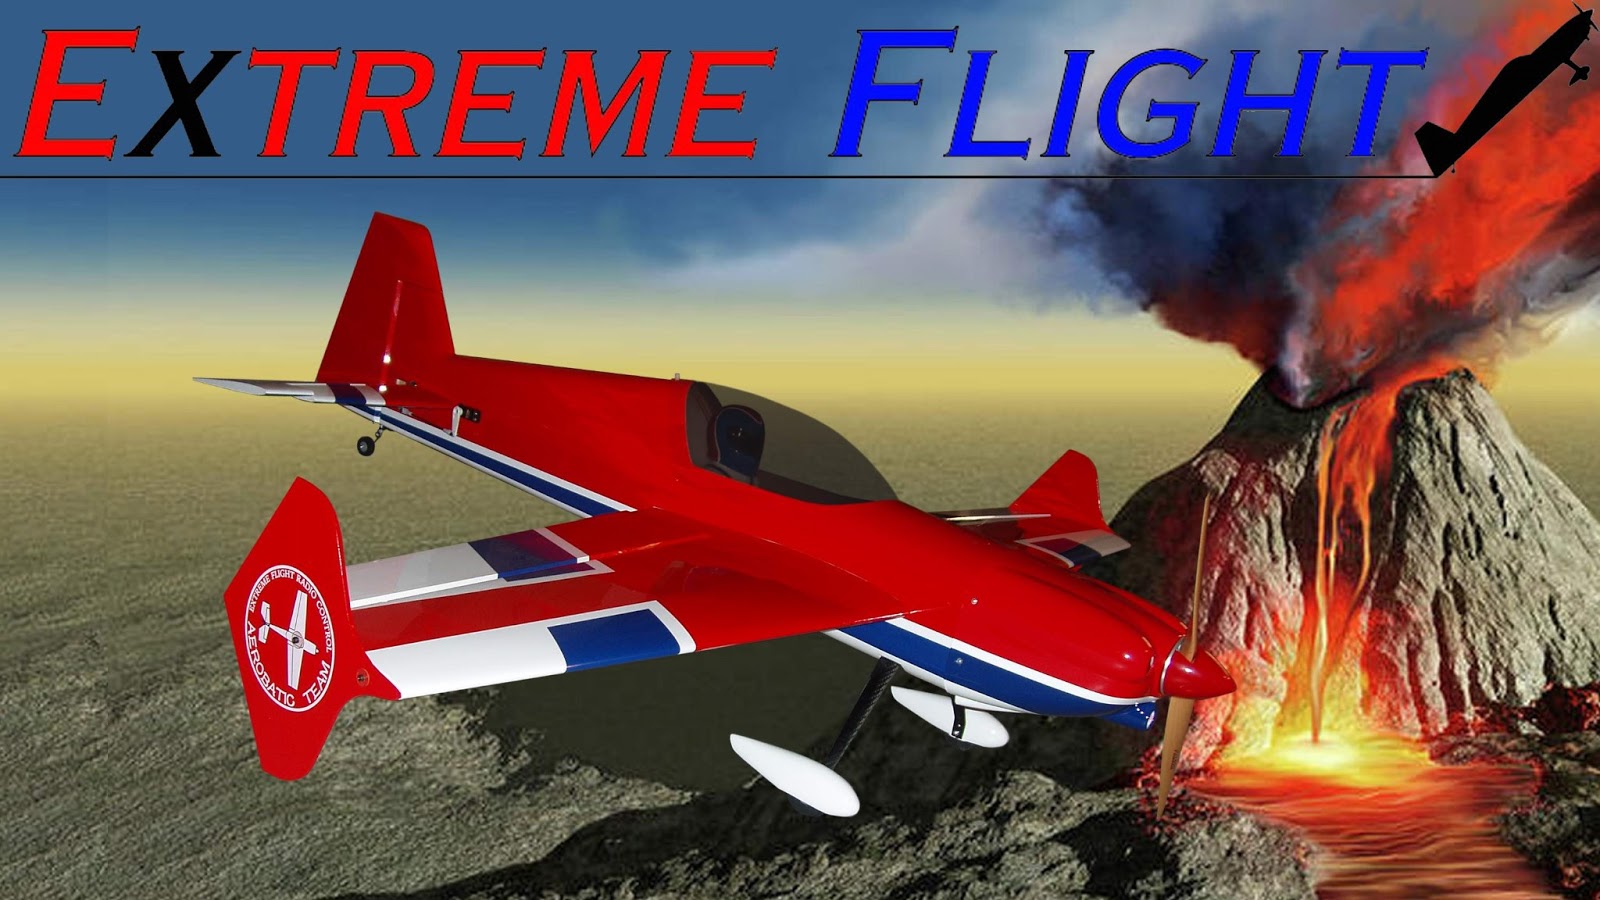 Extreme+Flight+Template+001.jpg